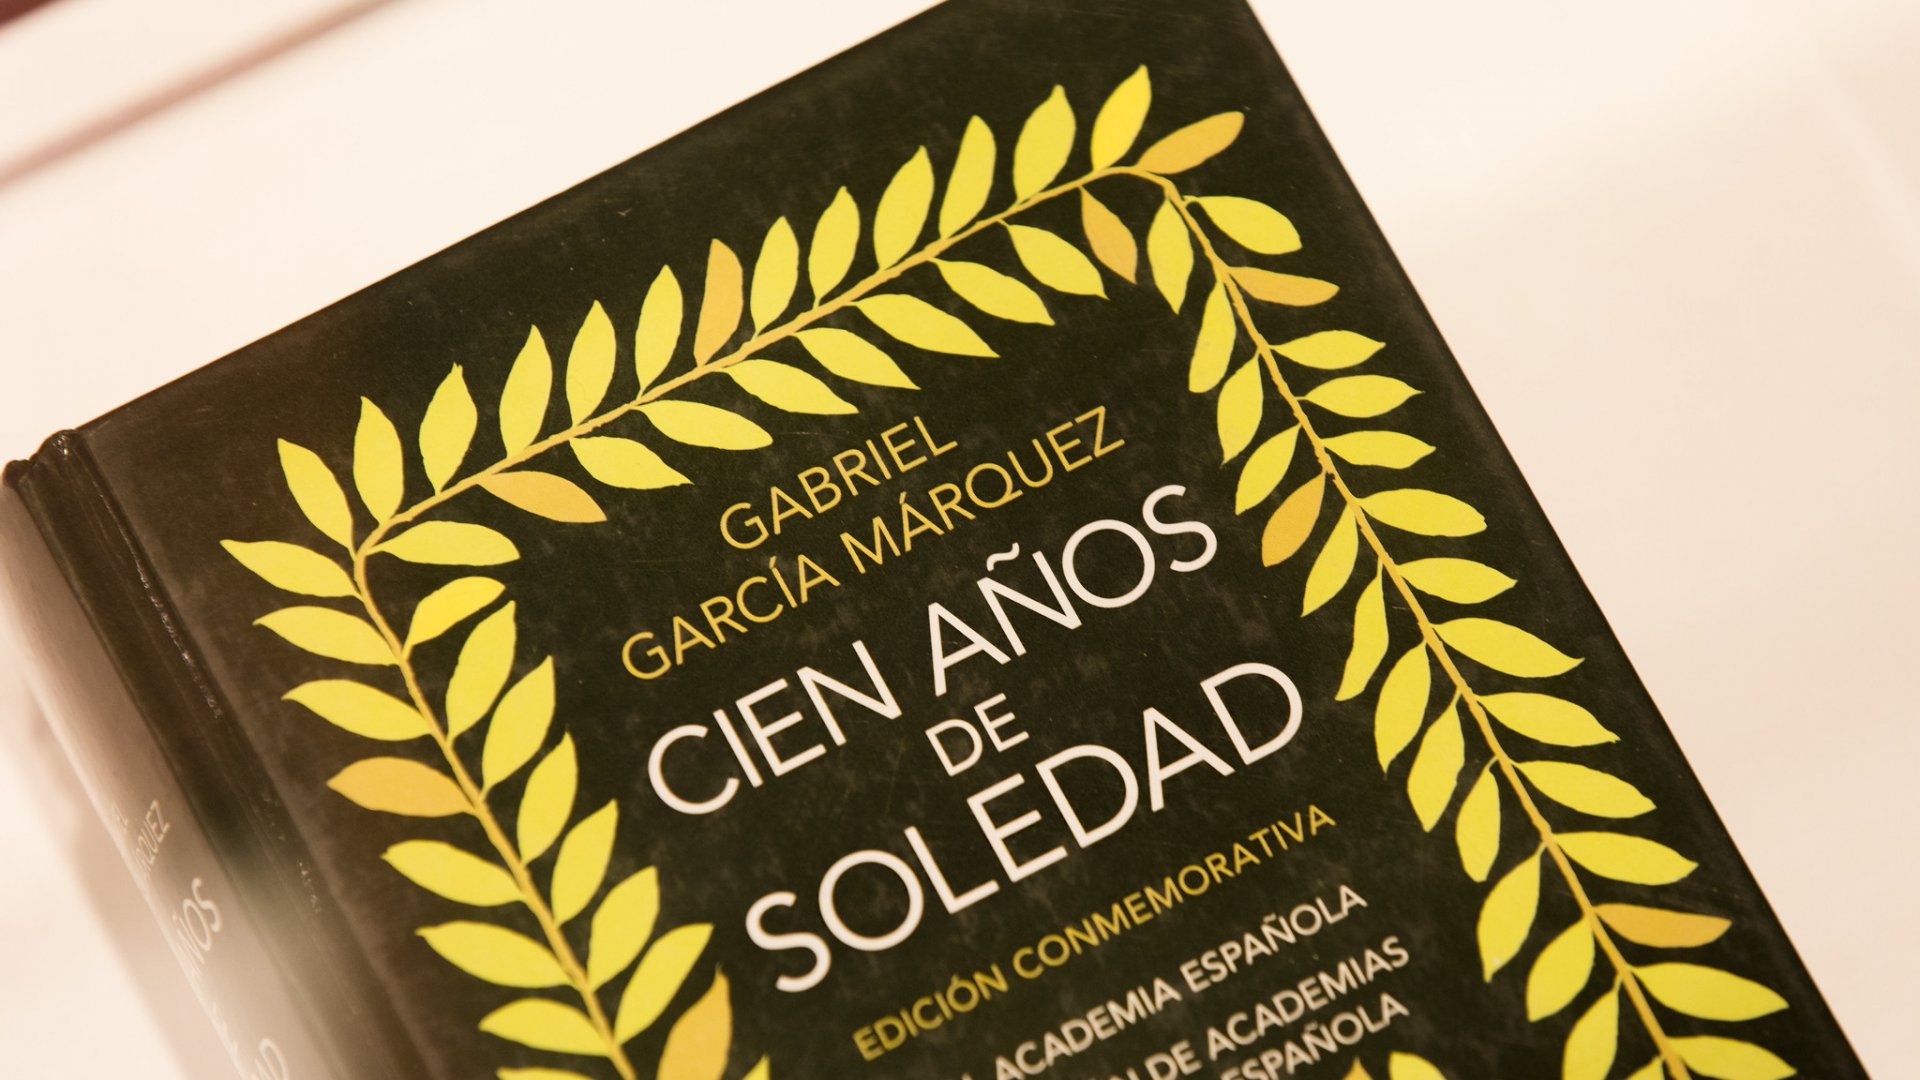 Gabriel Garcia Marquez, Colombian literature, Marquez's impact, Terra Colombia, 1920x1080 Full HD Desktop